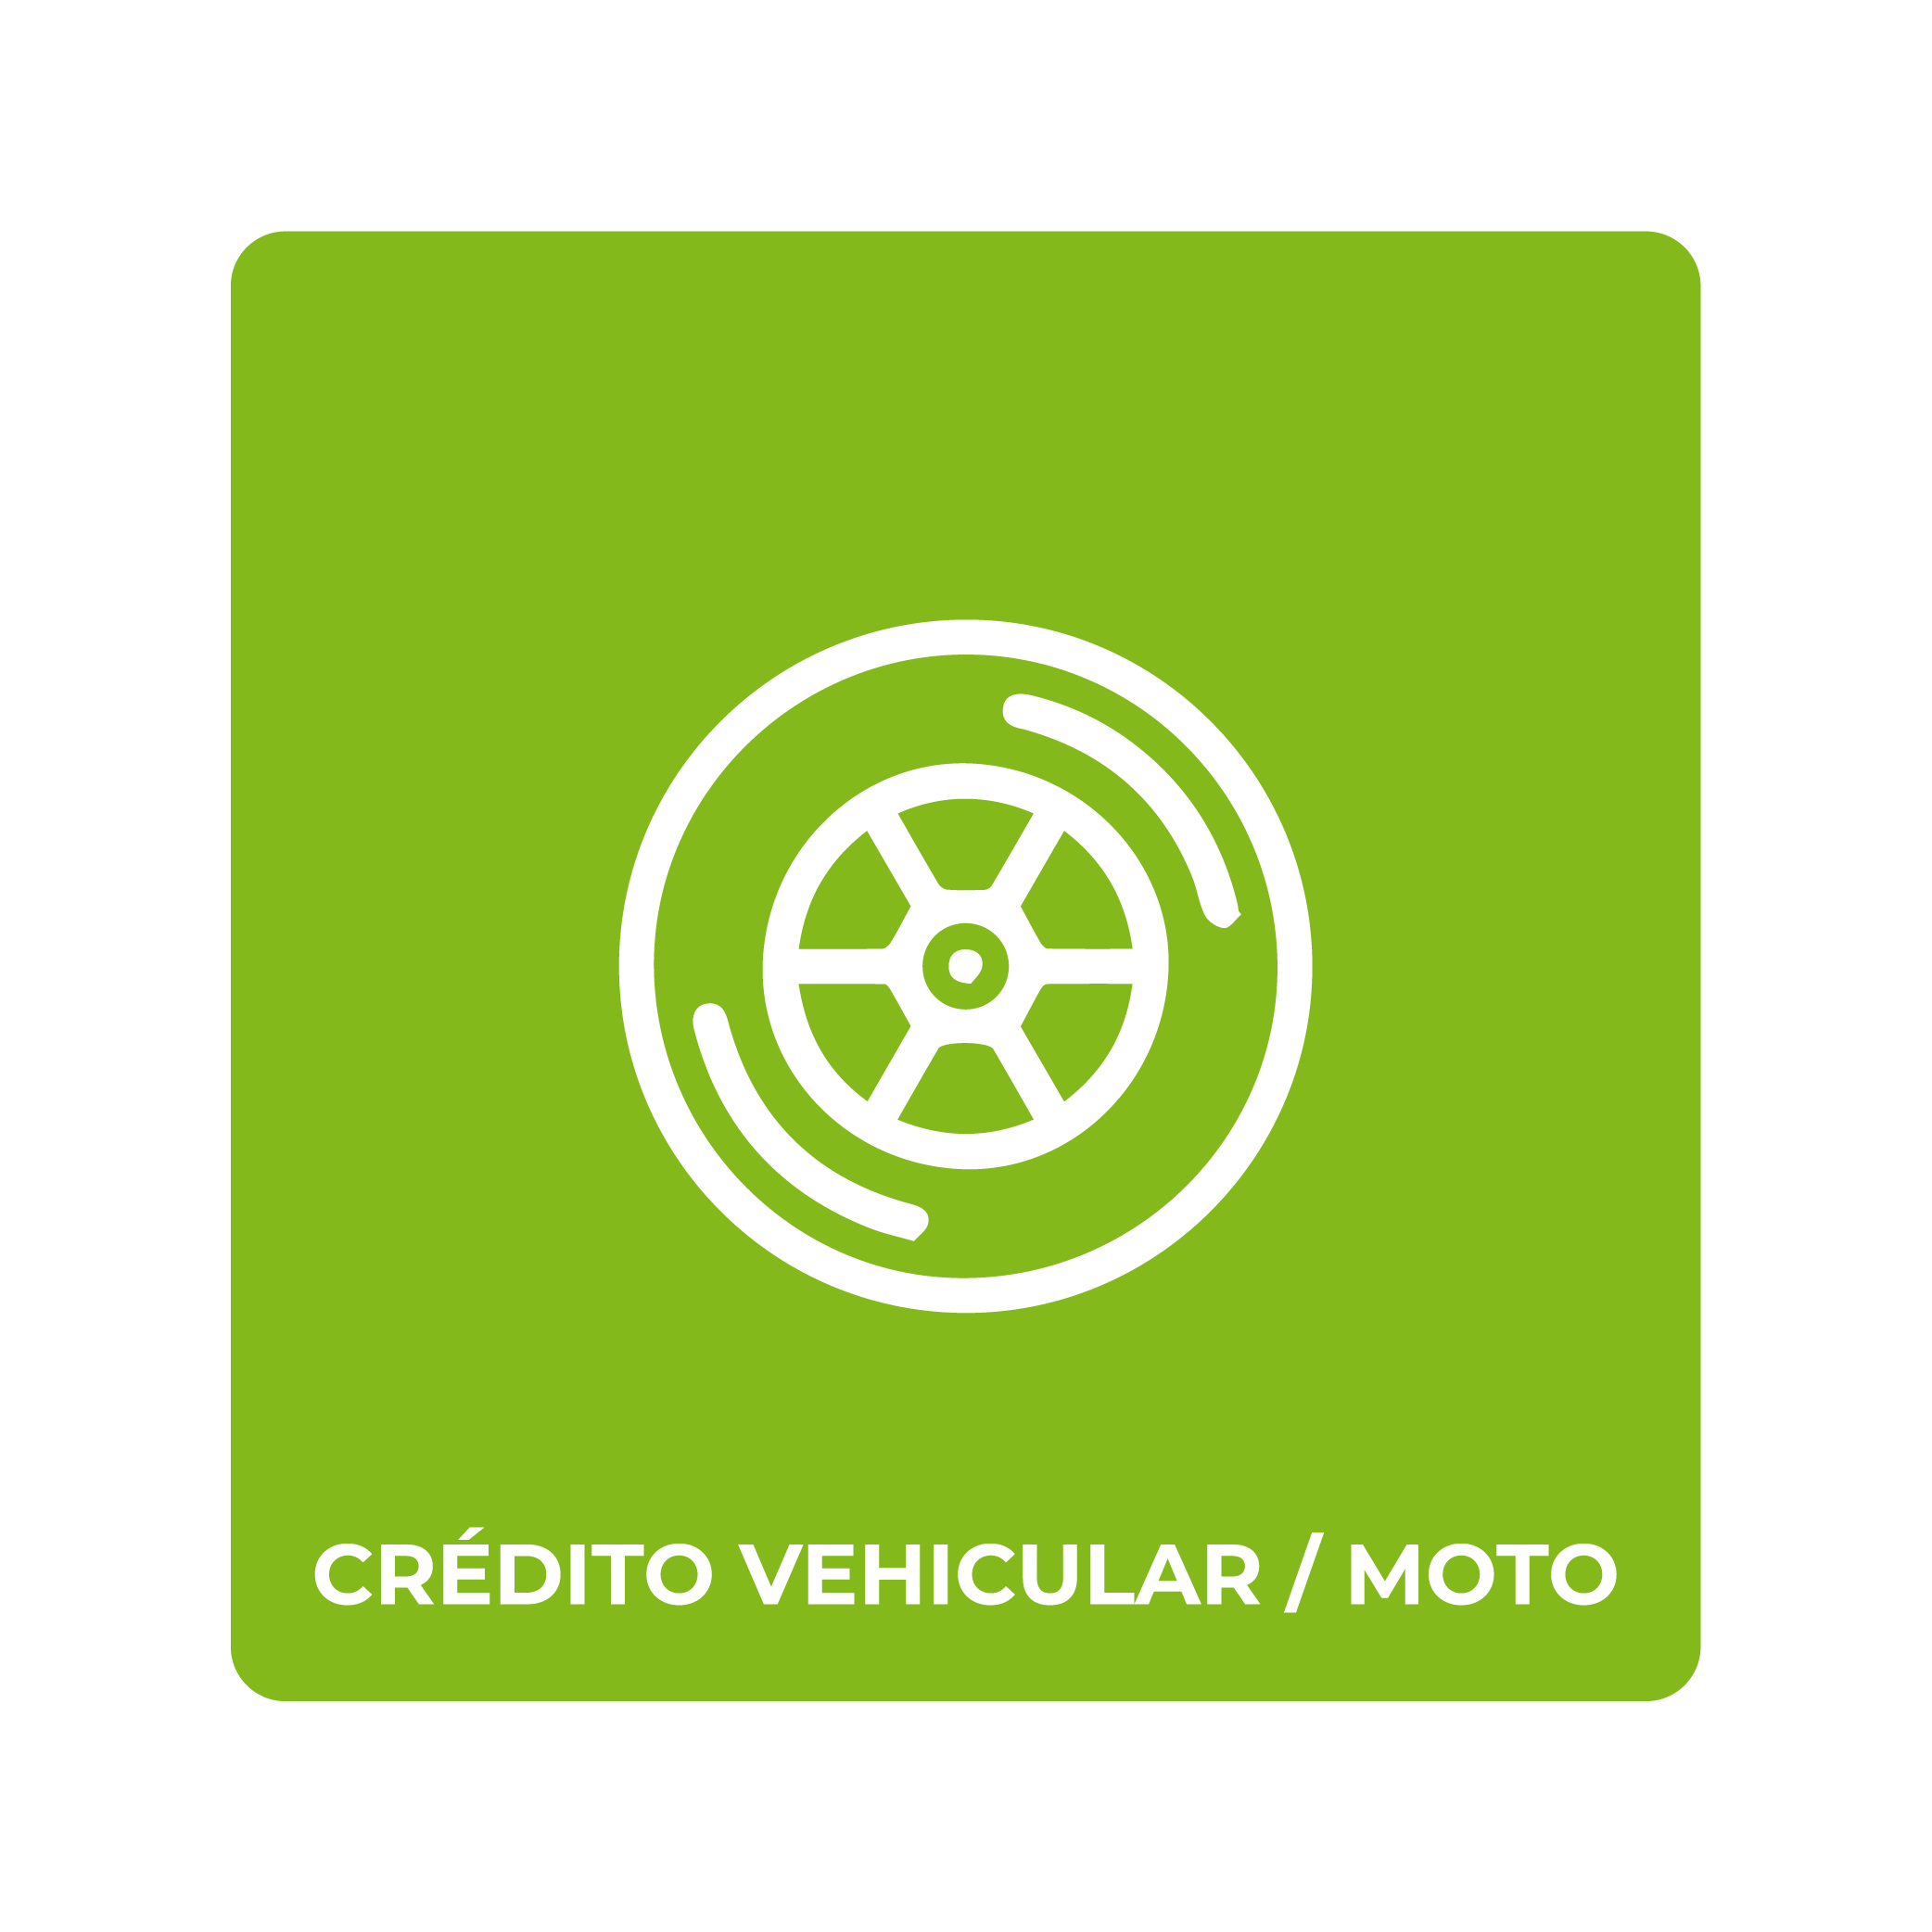 Crédito vehicular / moto - FONDEFAL